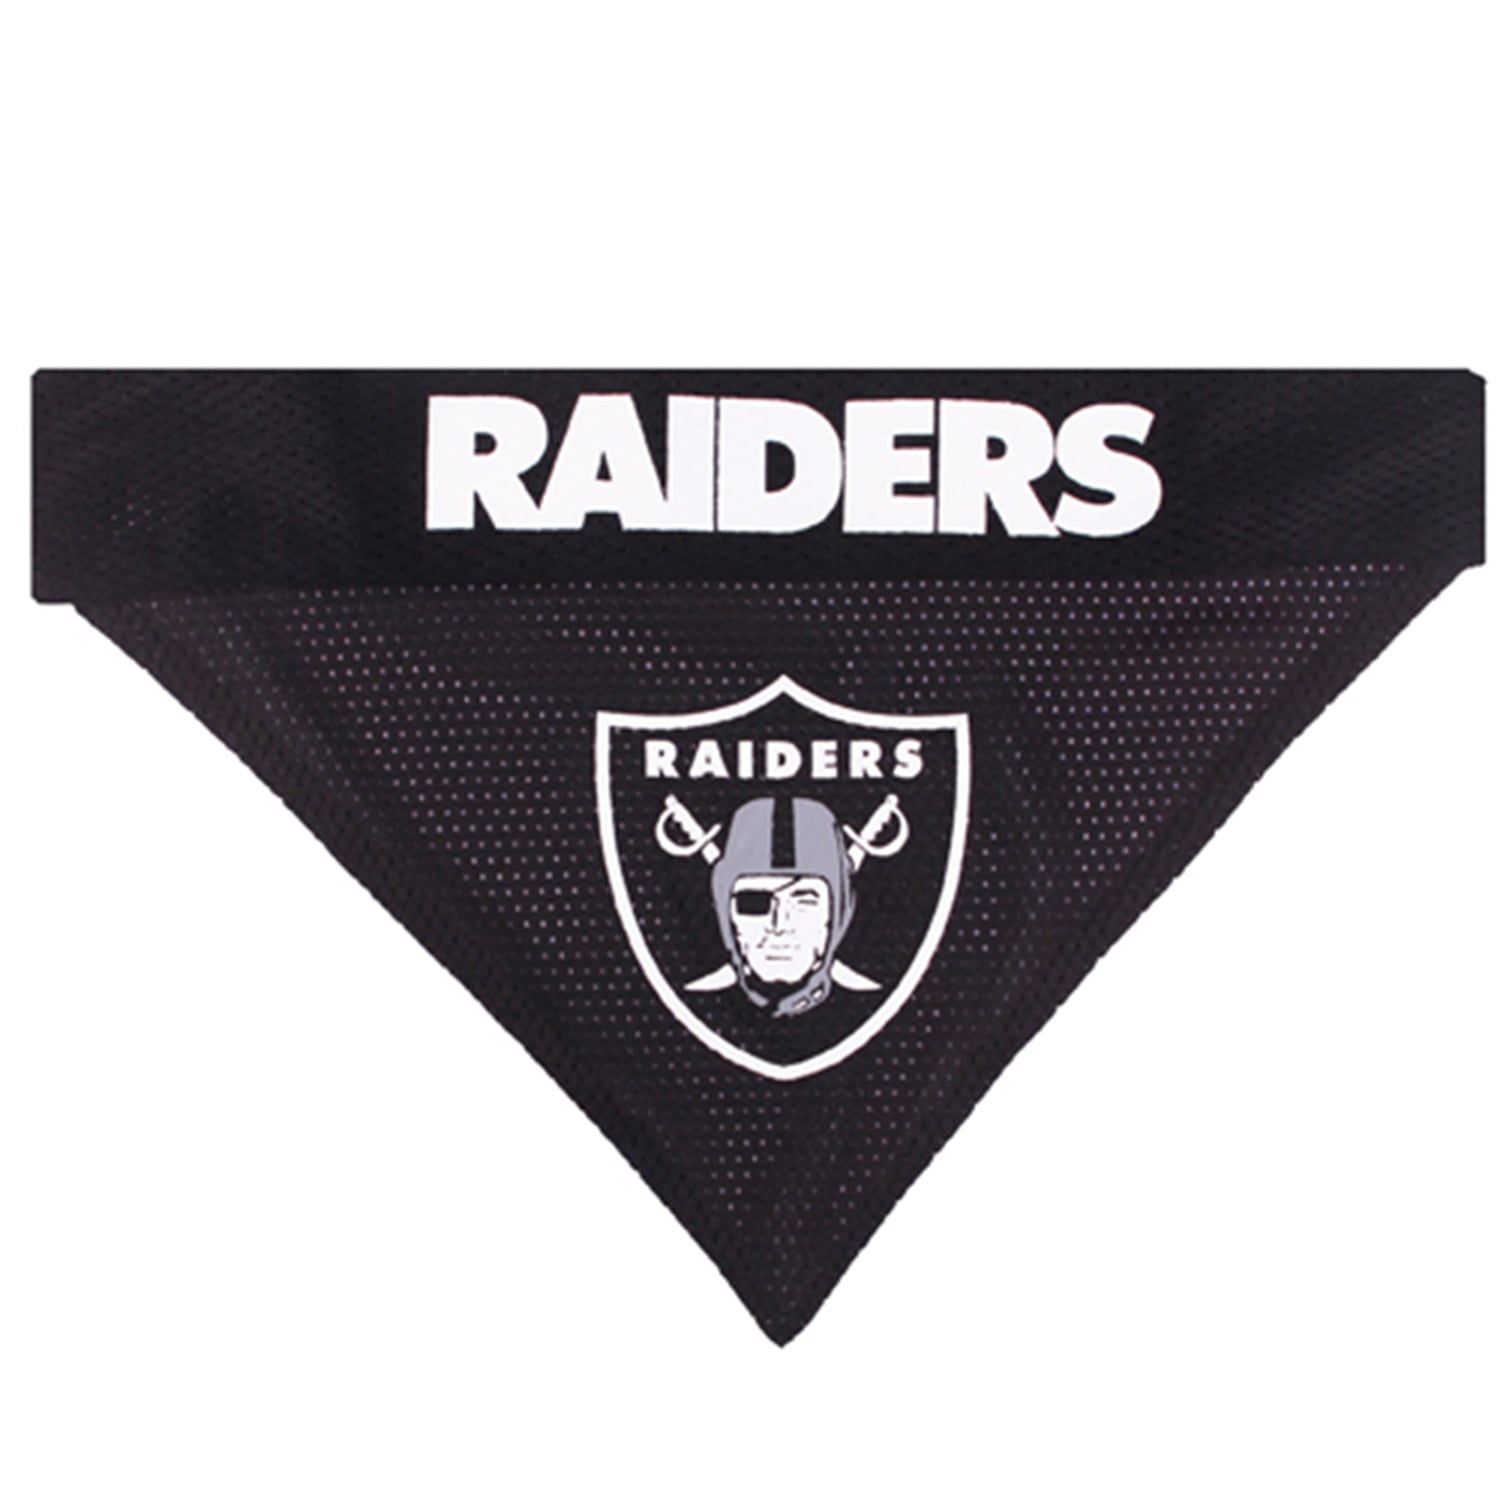 Las Vegas Raiders Over the Collar Dog Bandana // Raiders 